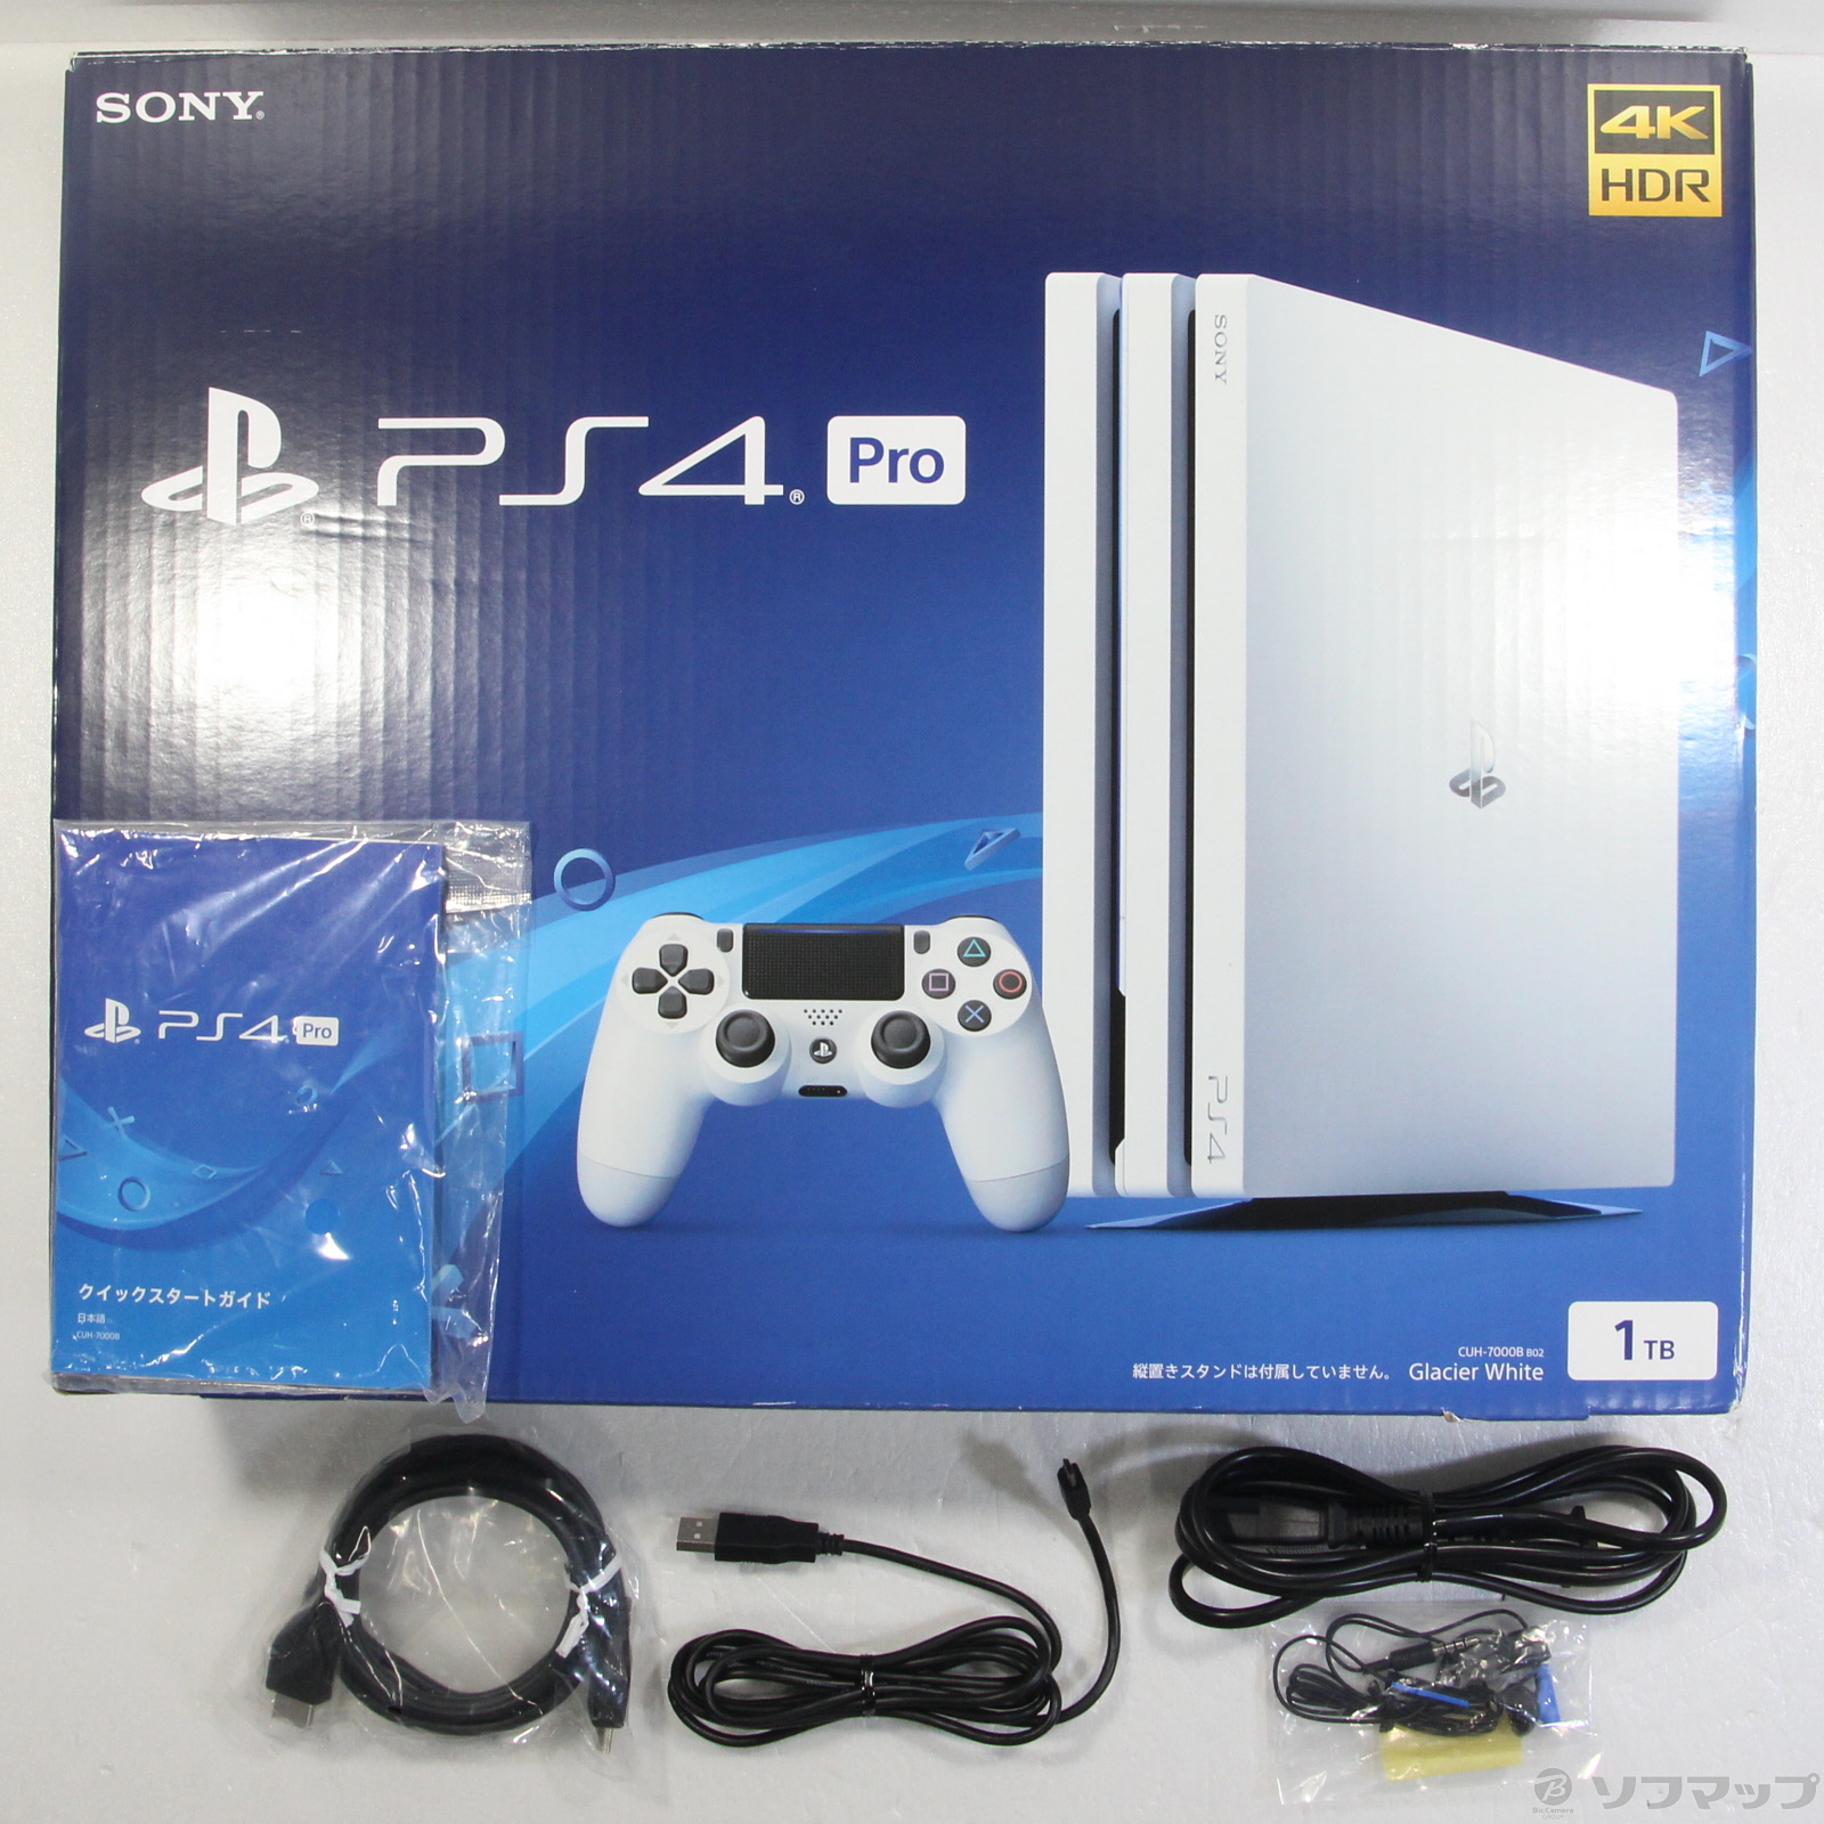 PS4 Pro CUH-7000B グレイシャーホワイト